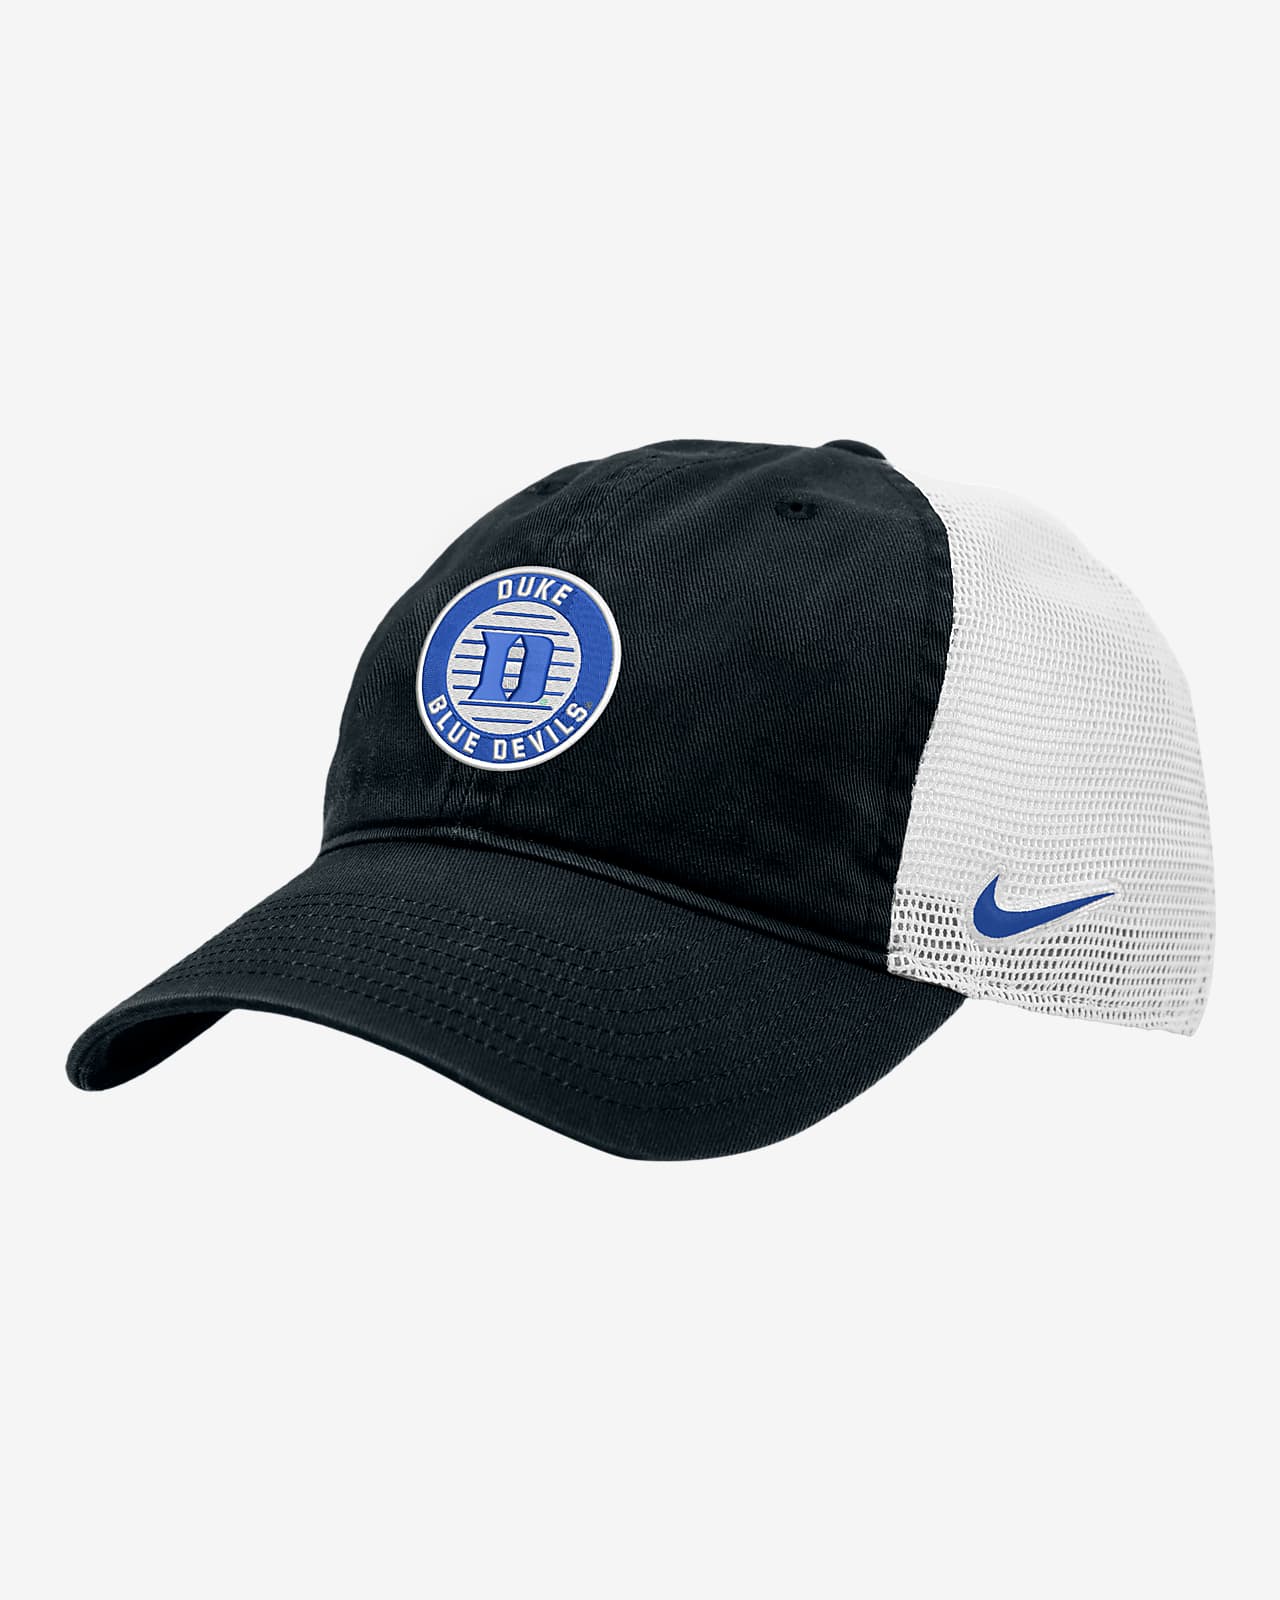 Duke Heritage86 Nike College Trucker Hat